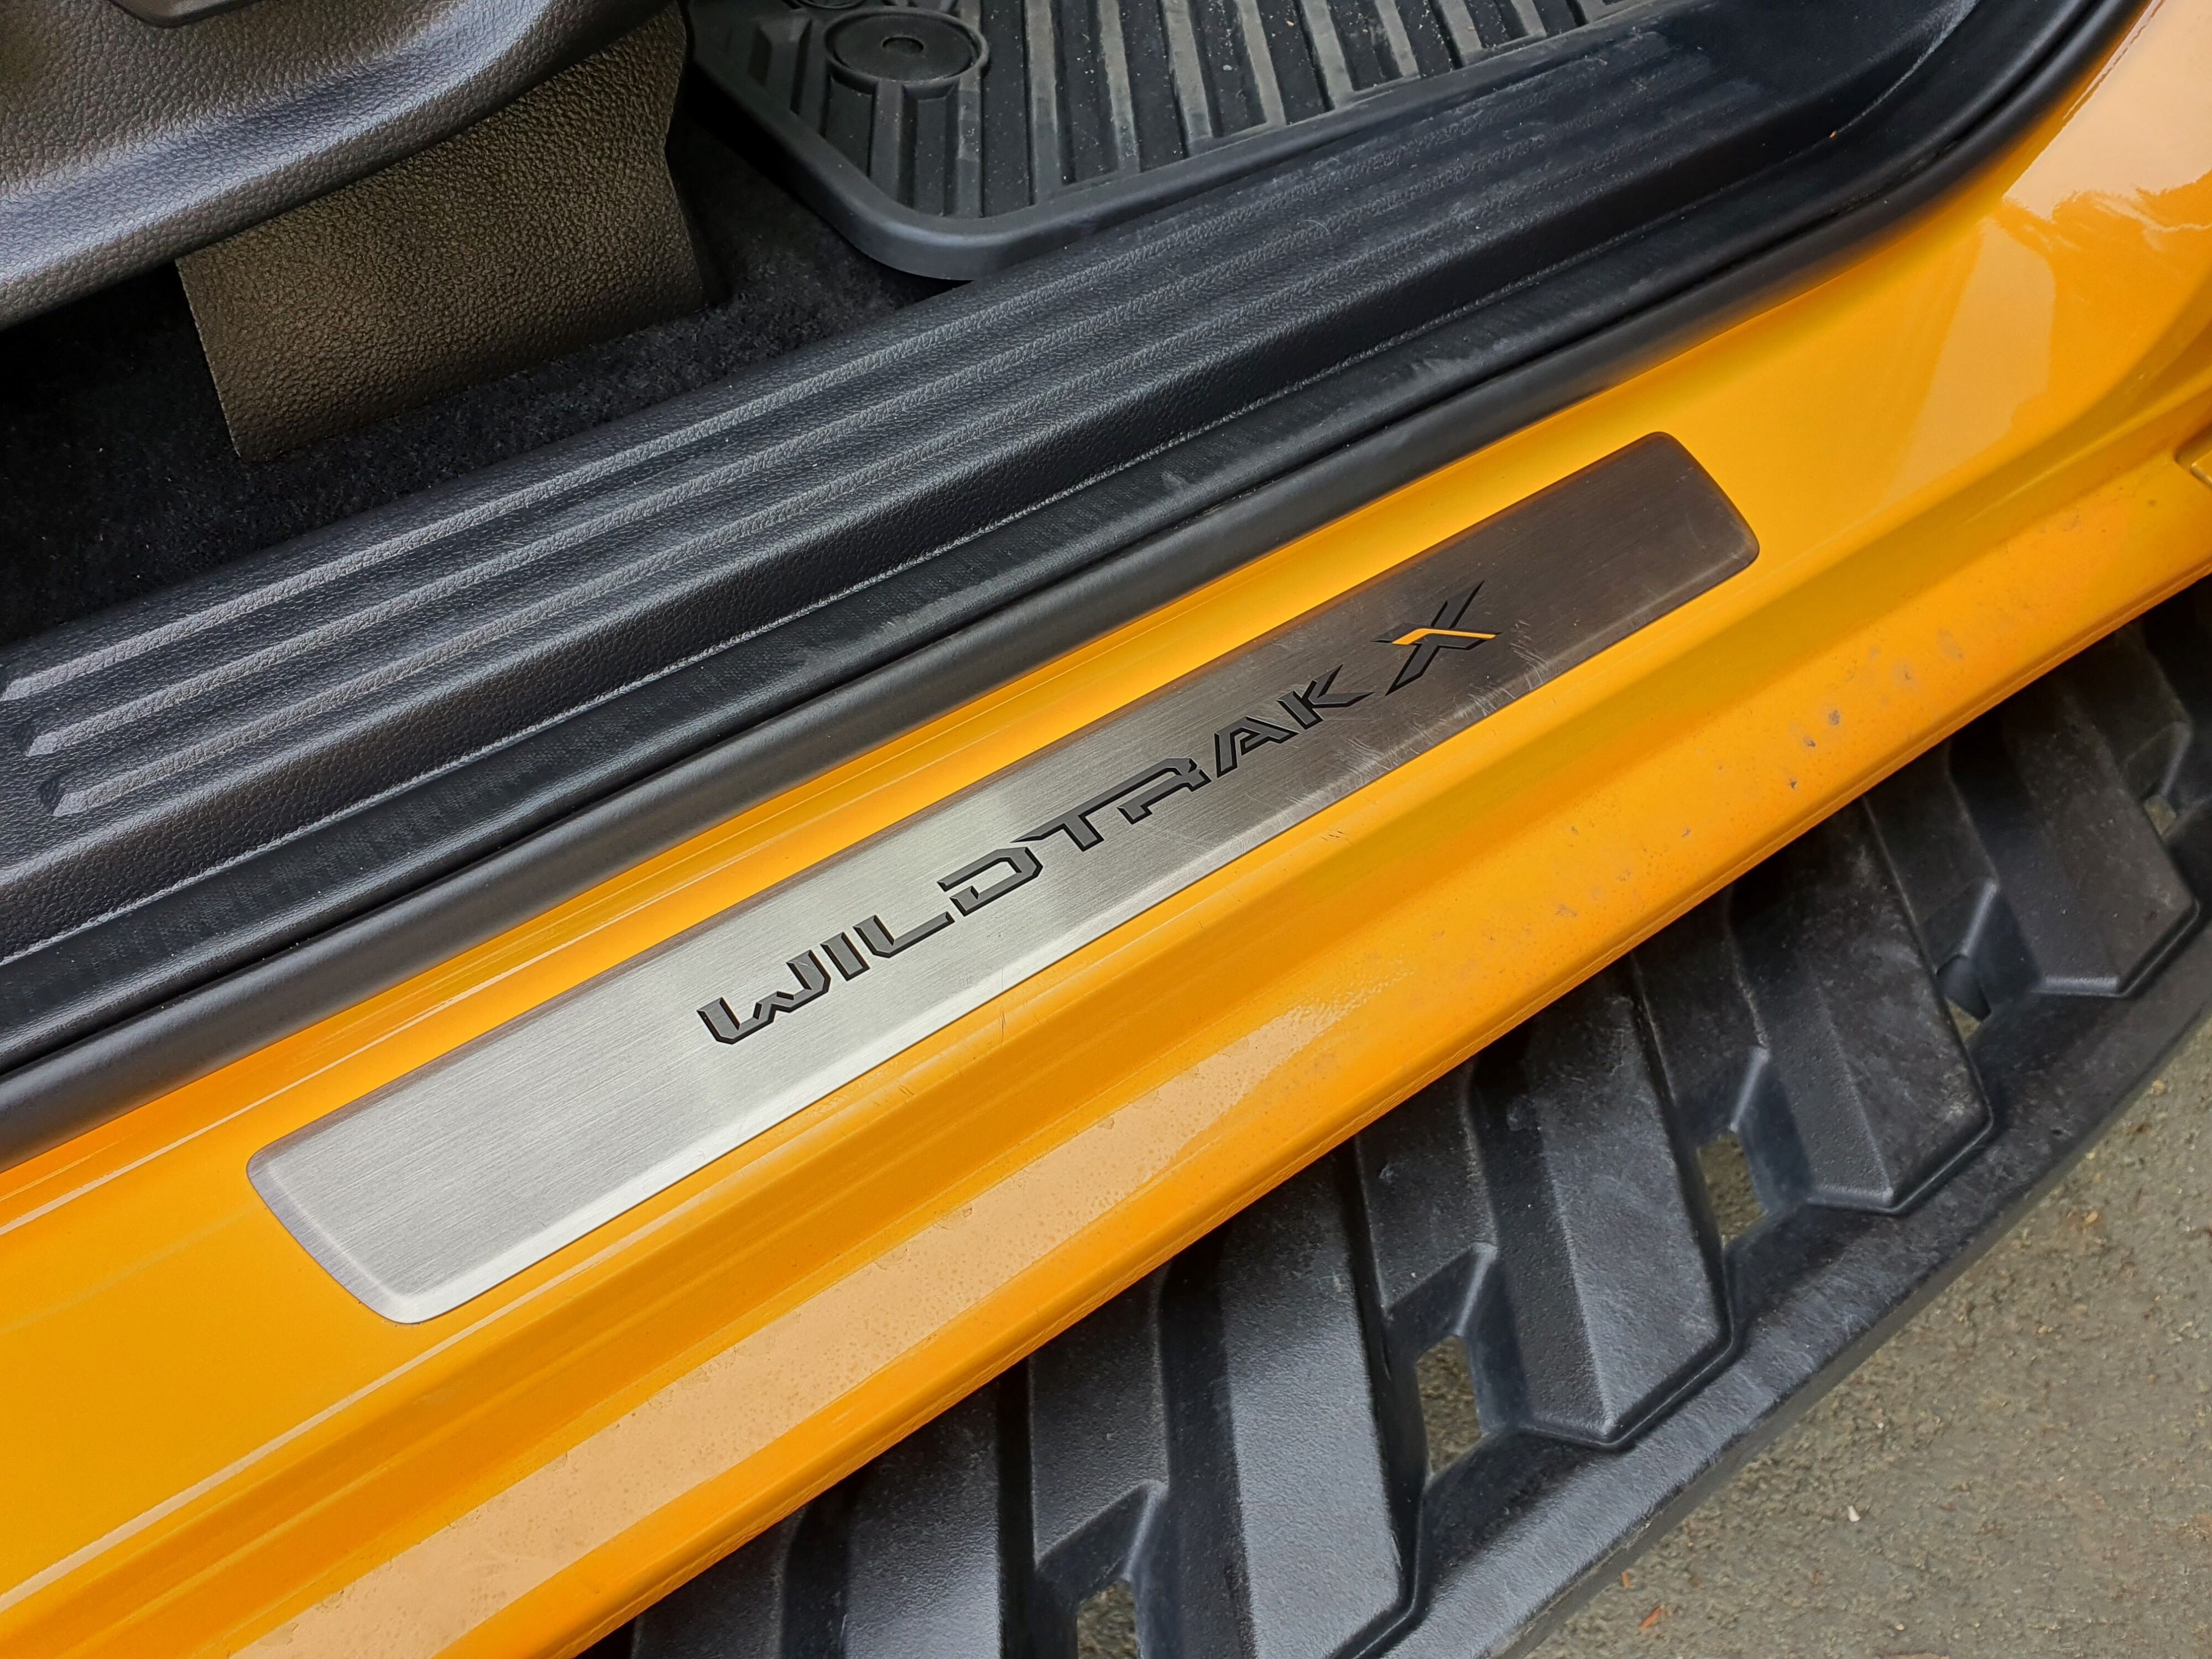 Wildtrak X treadplates on the interior of a 2023 Ford Ranger Wildtrak X in Cyber Orange.